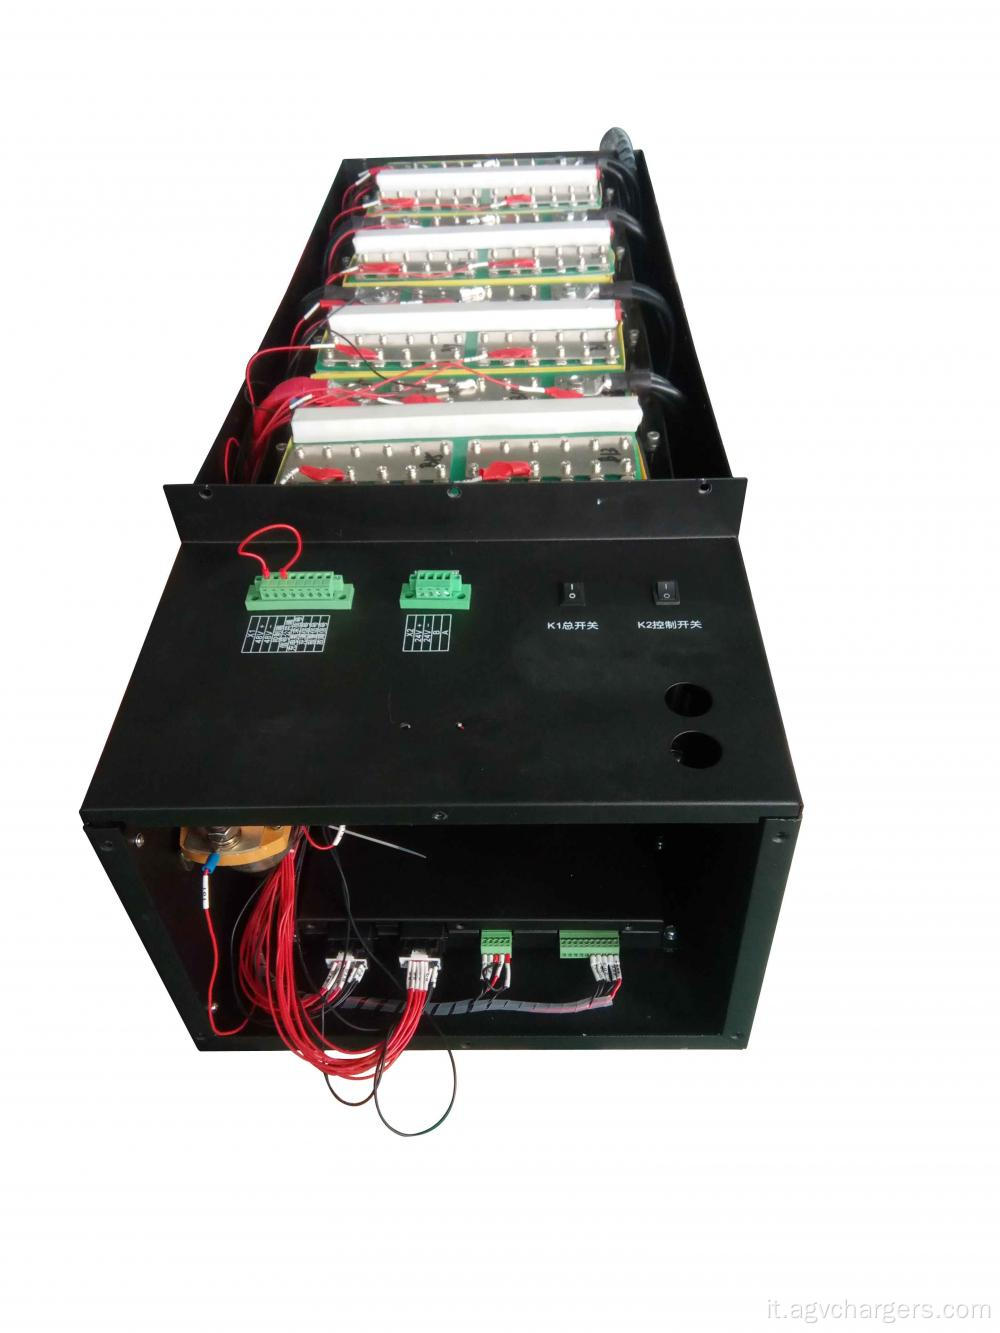 Batteria al litio 24V / 80Ah per AGV e robot mobili